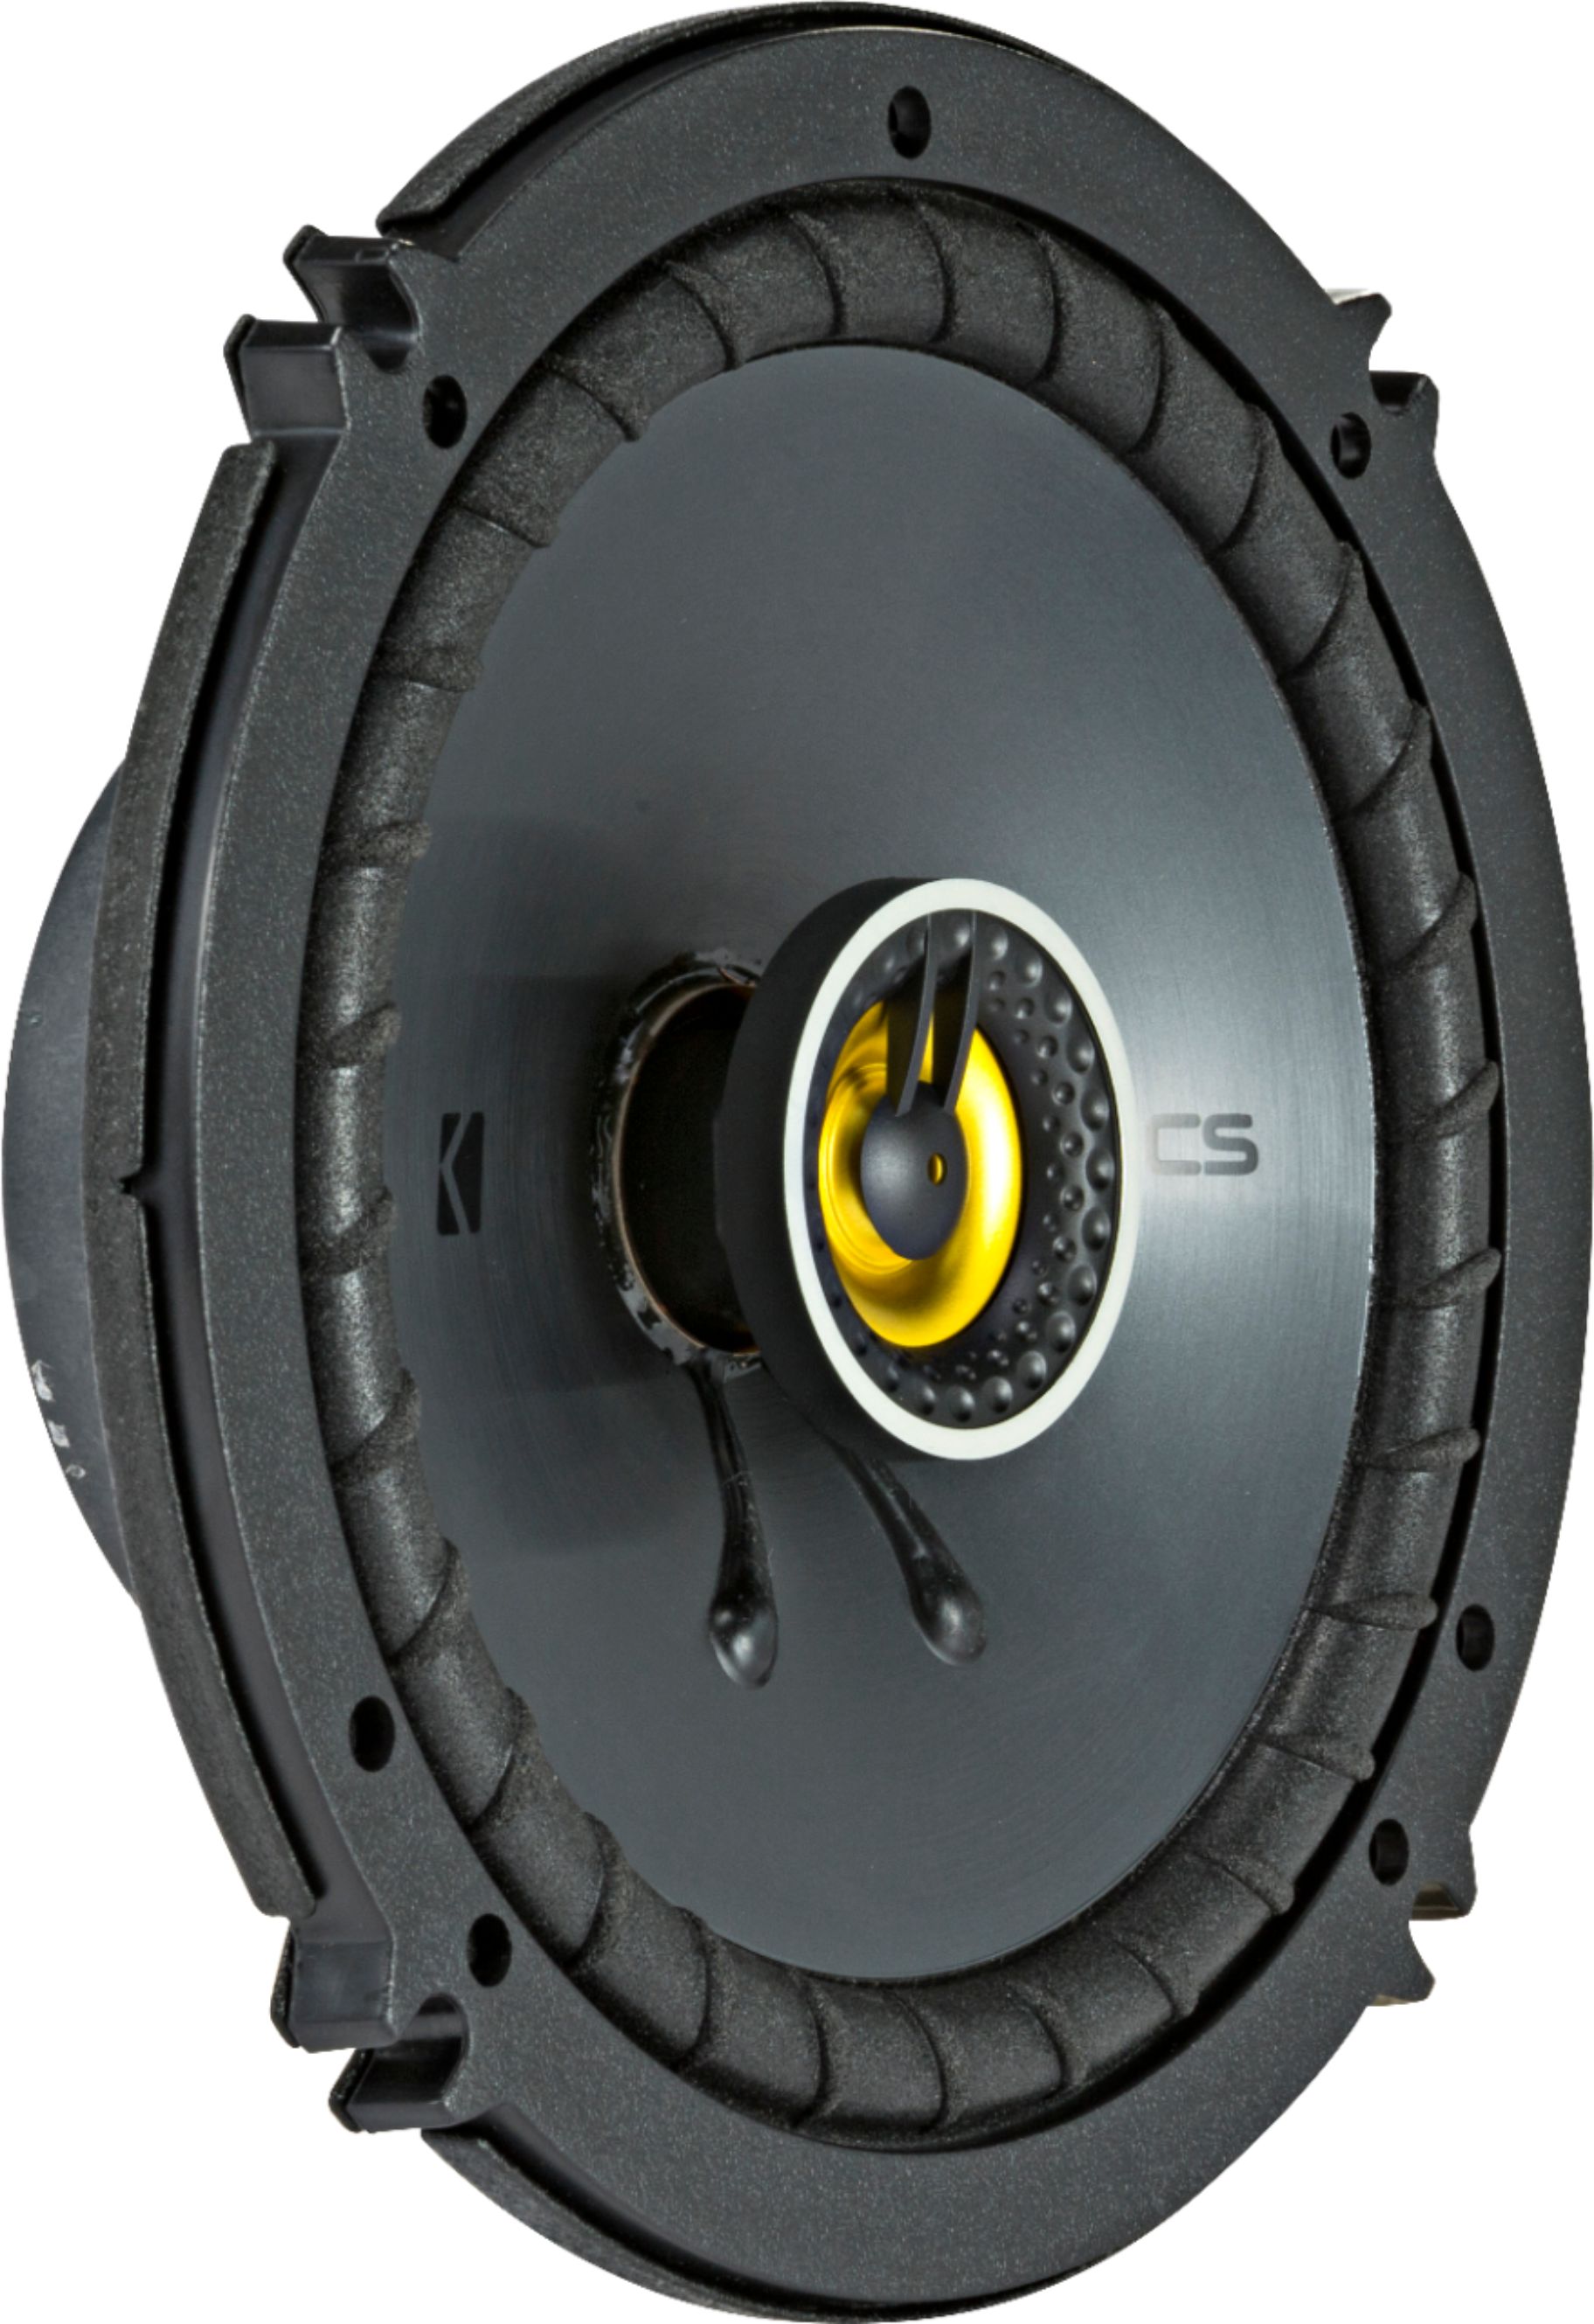 Angle View: KICKER - CS Series 6-1/2" 2-Way Car Speakers with Polypropylene Cones (Pair) - Yellow/Black